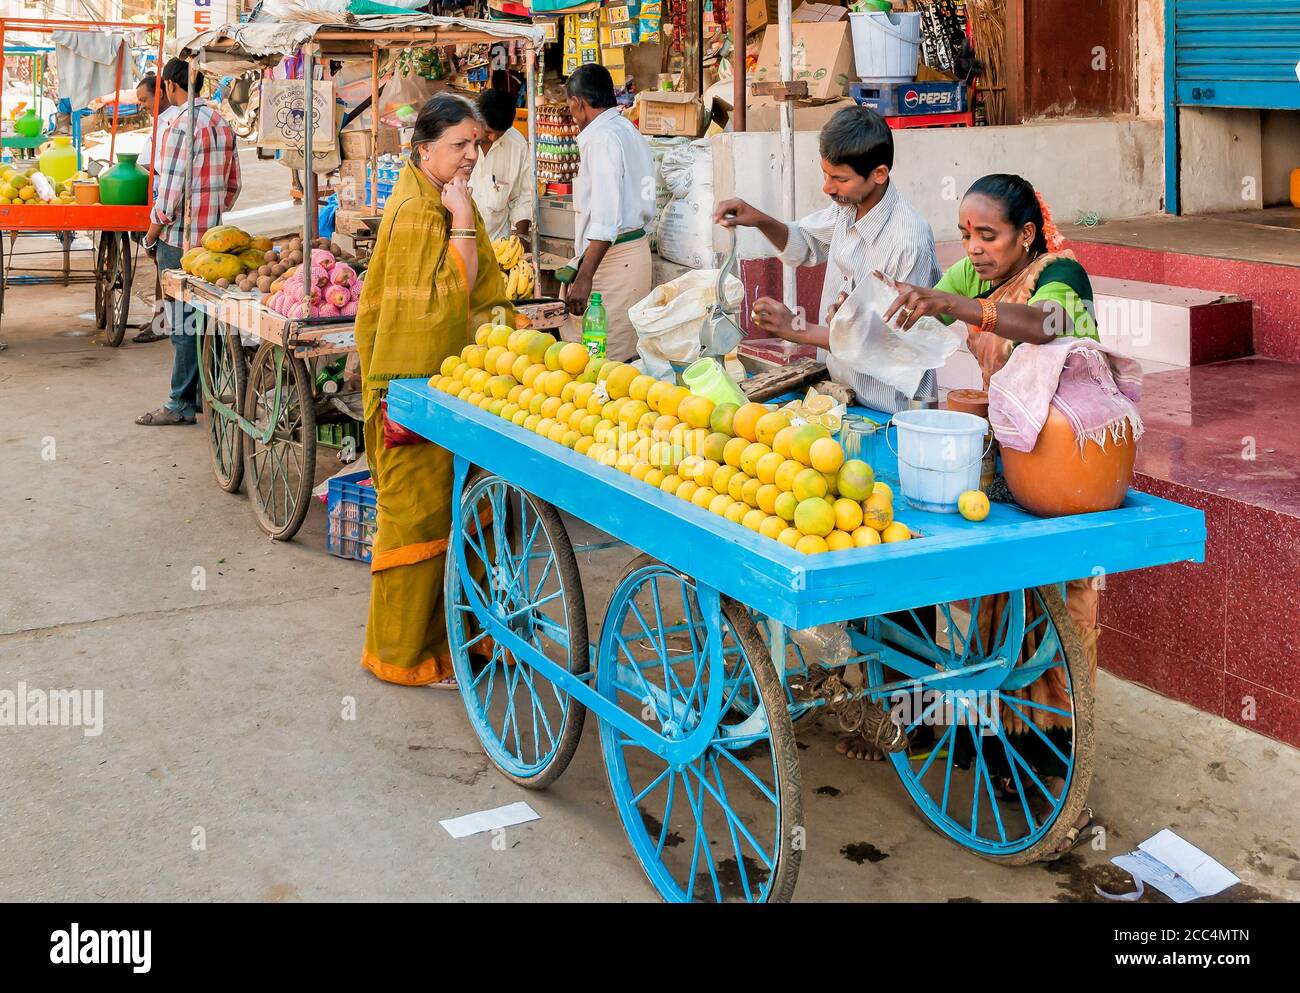 Puttaparthi, Andhra Pradesh, India - January 13, 2013: Street food vendors selling lemon juice in the Puttaparthi village. Stock Photo